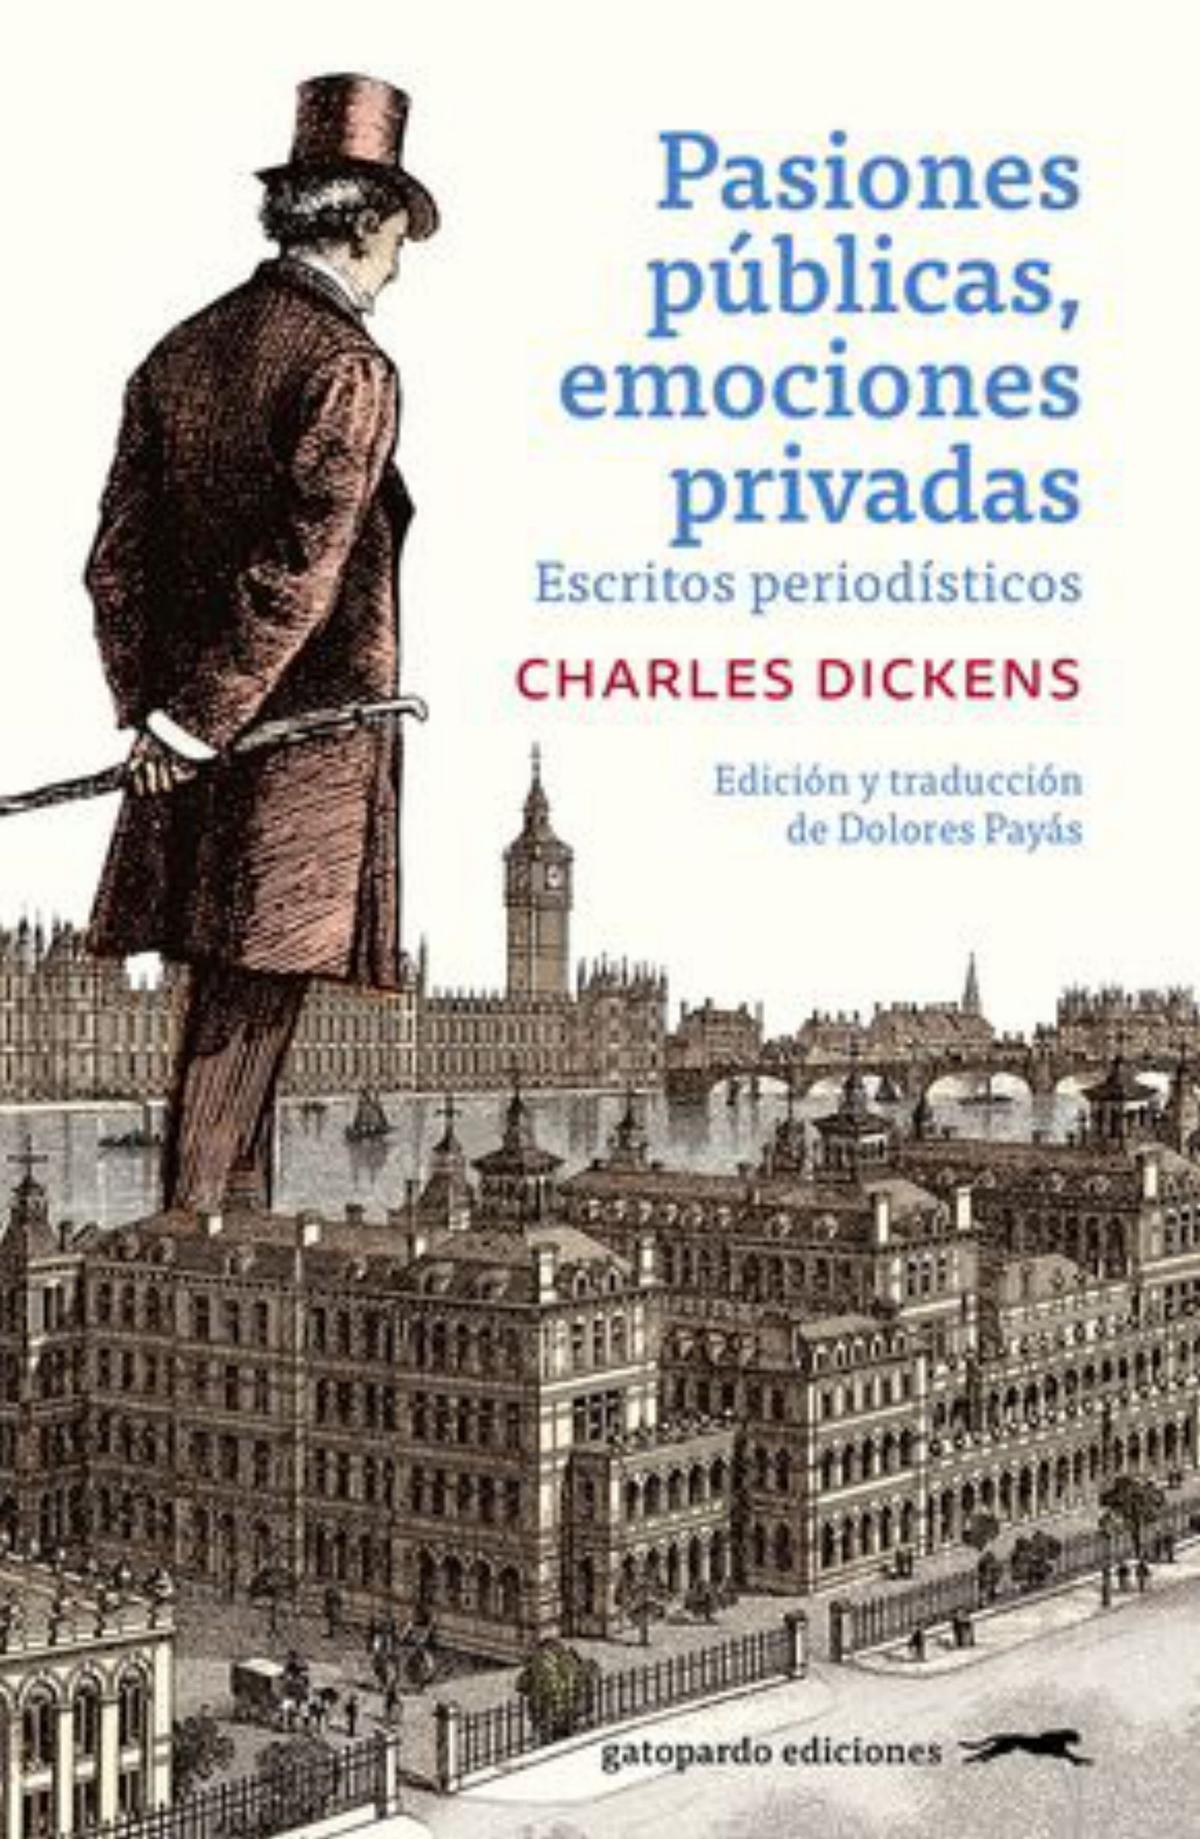 Dickens domina la escena 